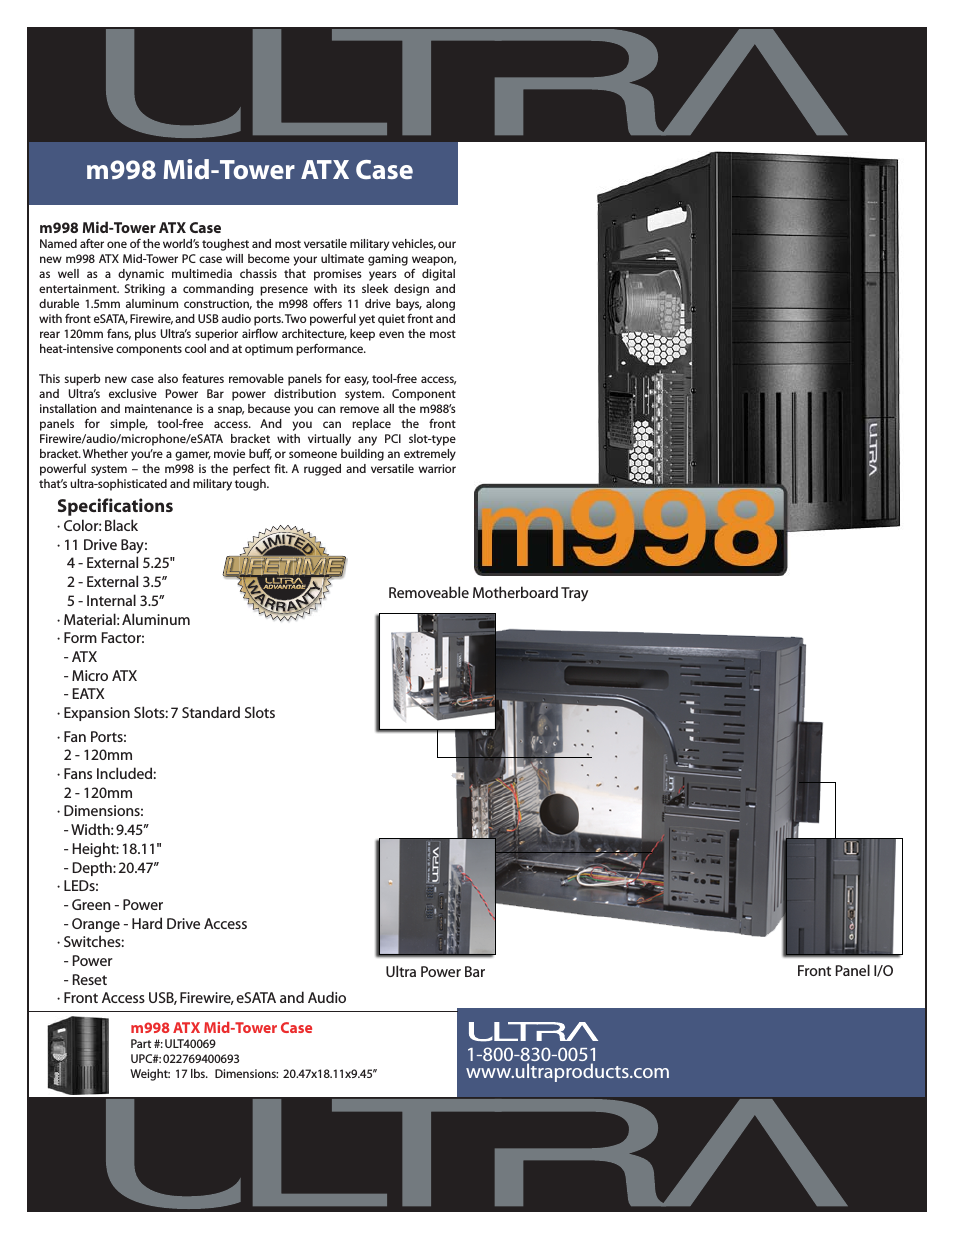 Mid-Tower ATX Case m998